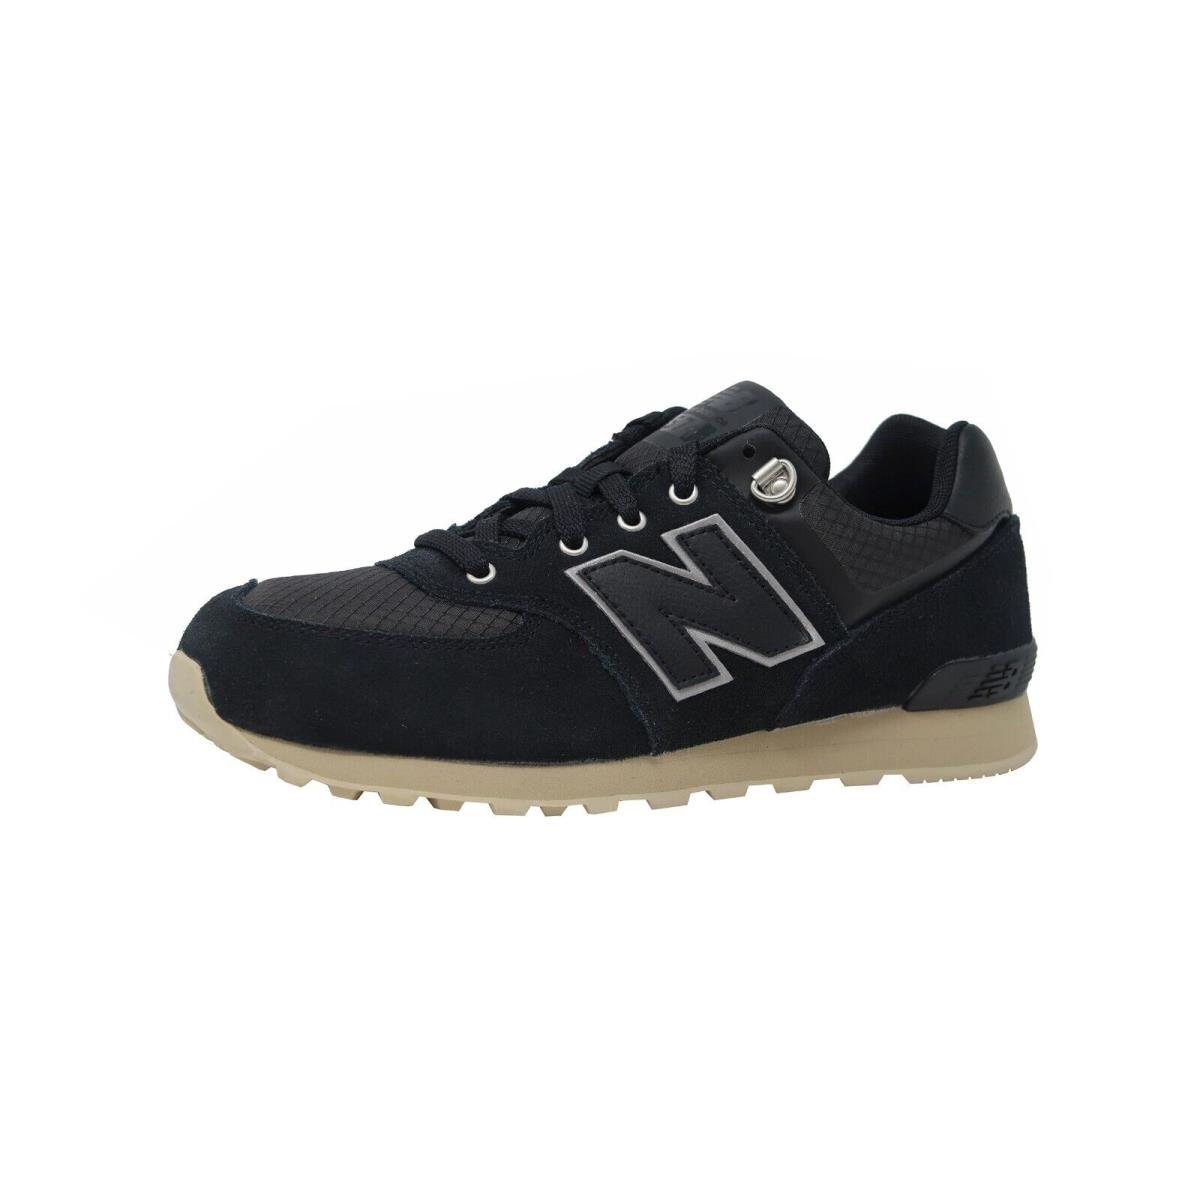 New Balance 574 Big Kids Running Shoes Sneakers KL574VIG - Black/tan